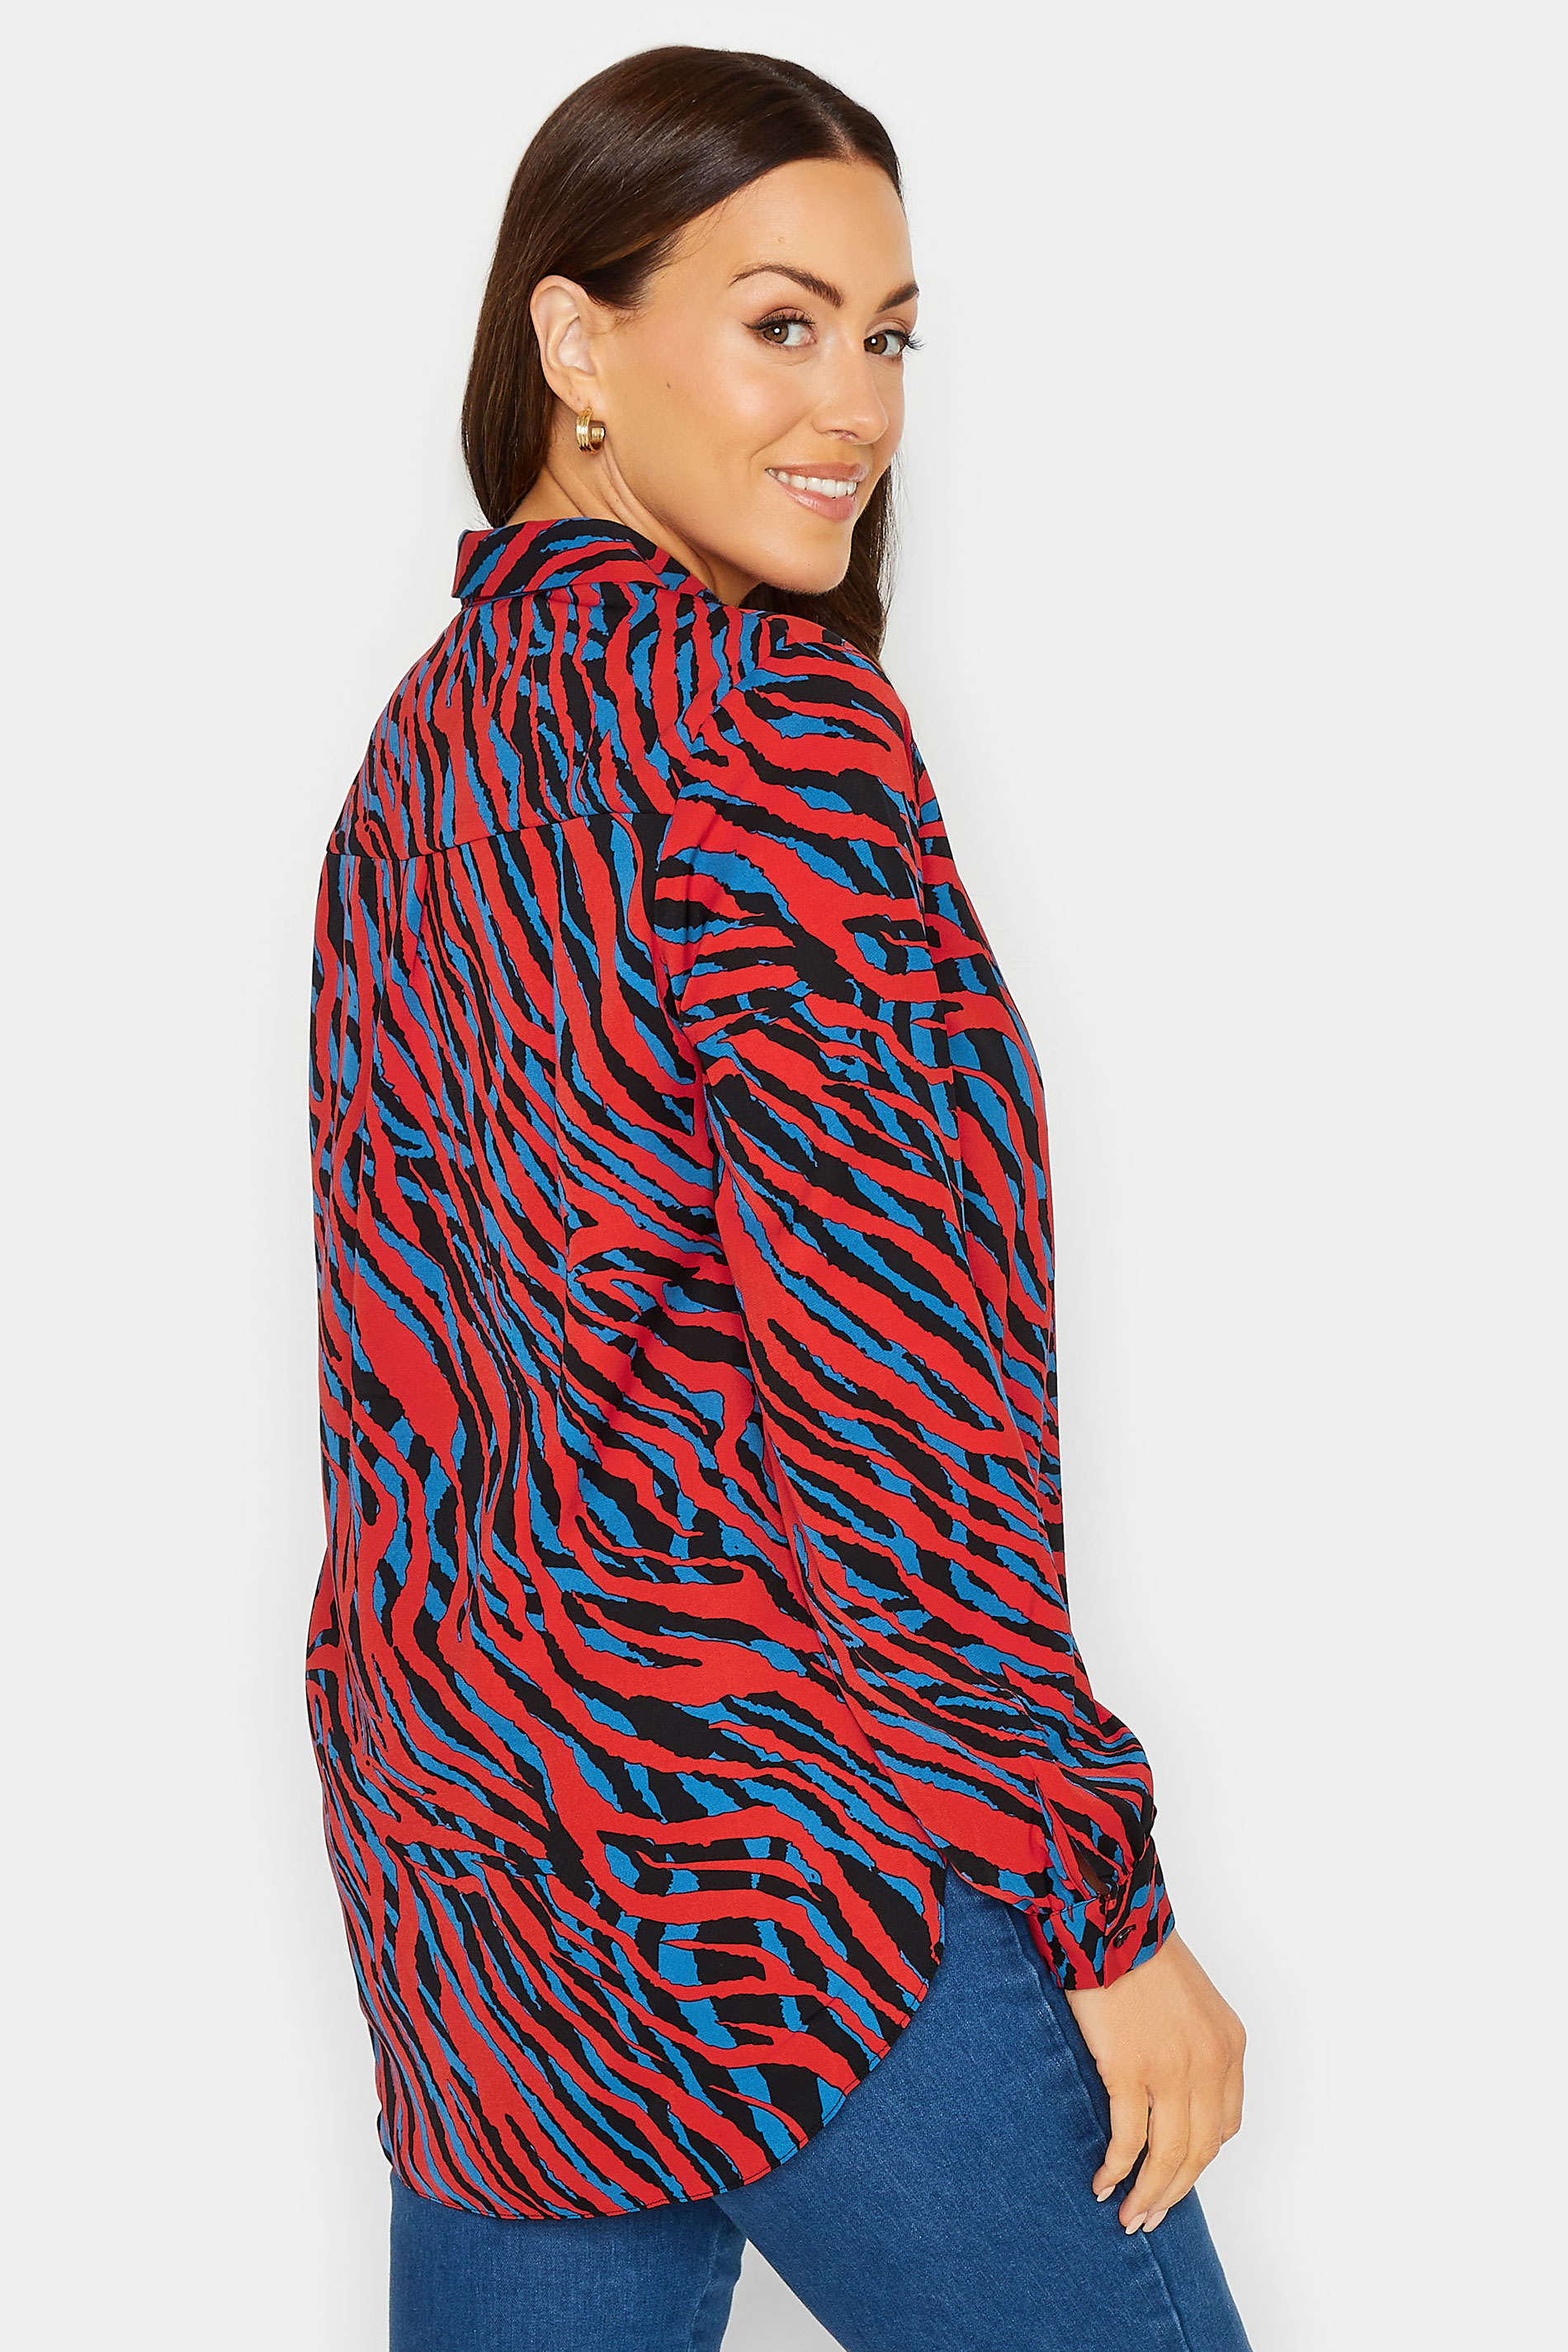 M&Co Red Zebra Print Long Sleeve Shirt | M&Co 3